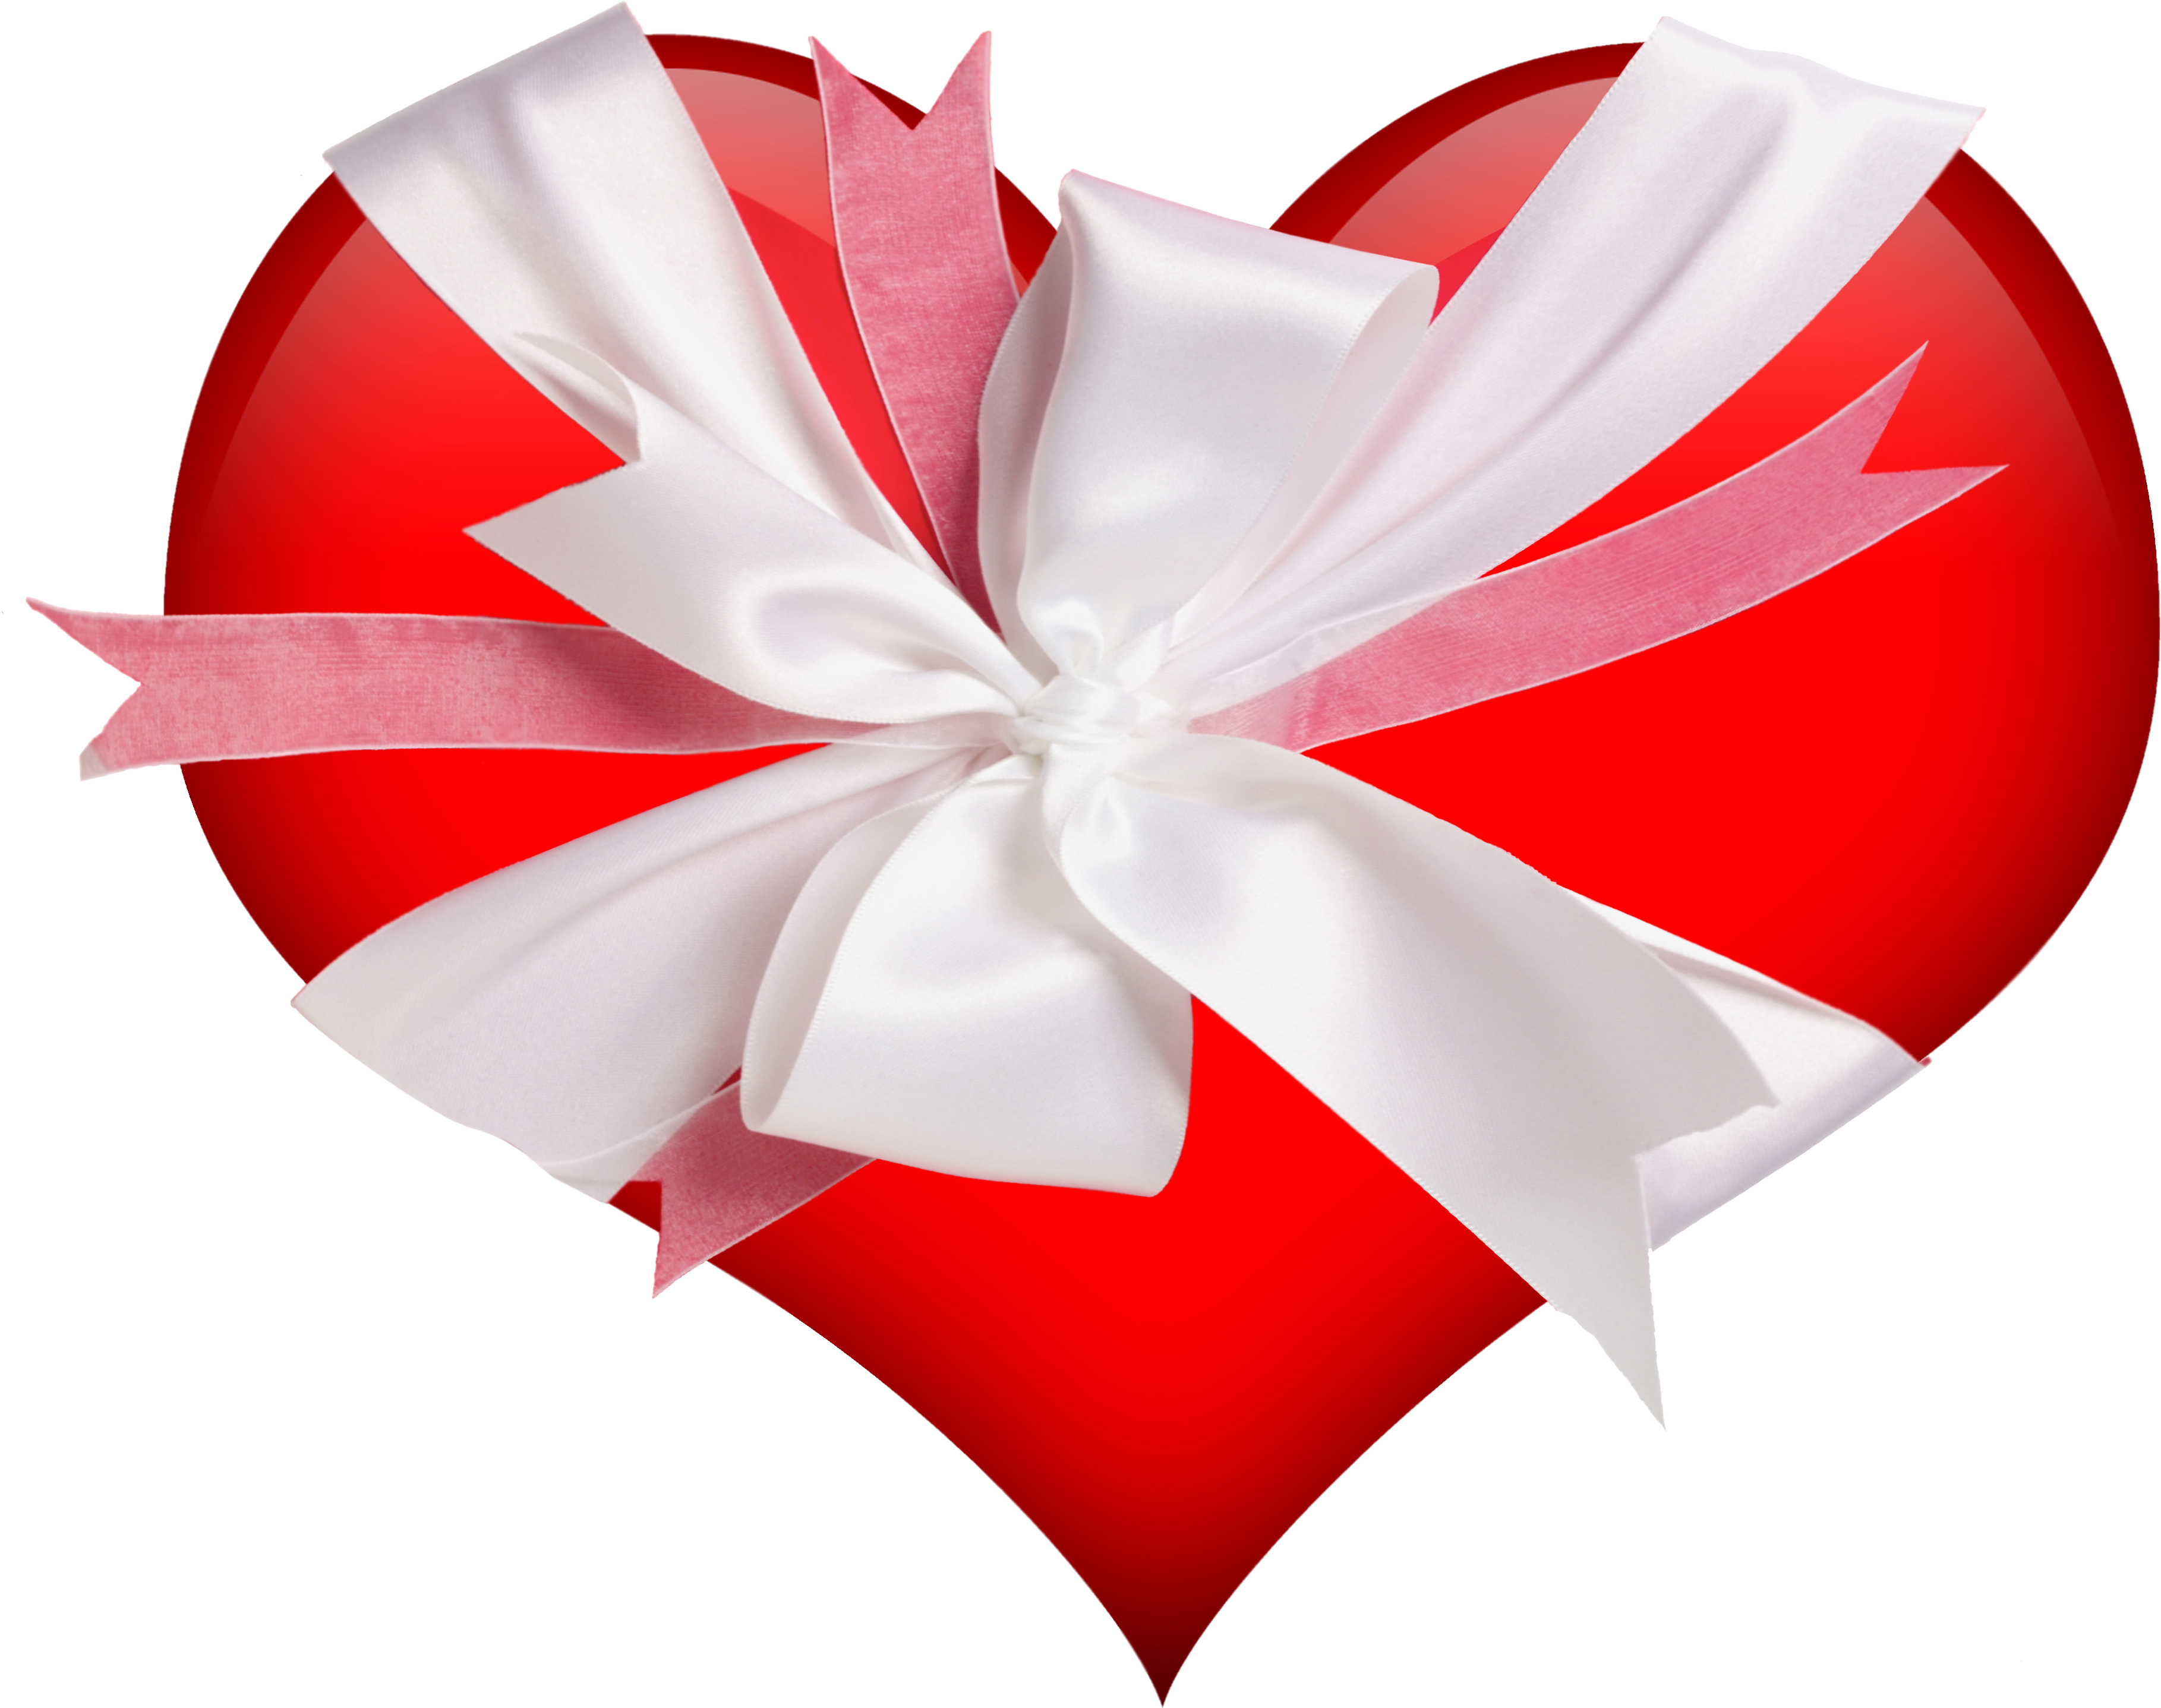 Heart Valentine's Day Gift February 14 Greeting & Note - Sevgililer Günü Gifleri (4916x4800)